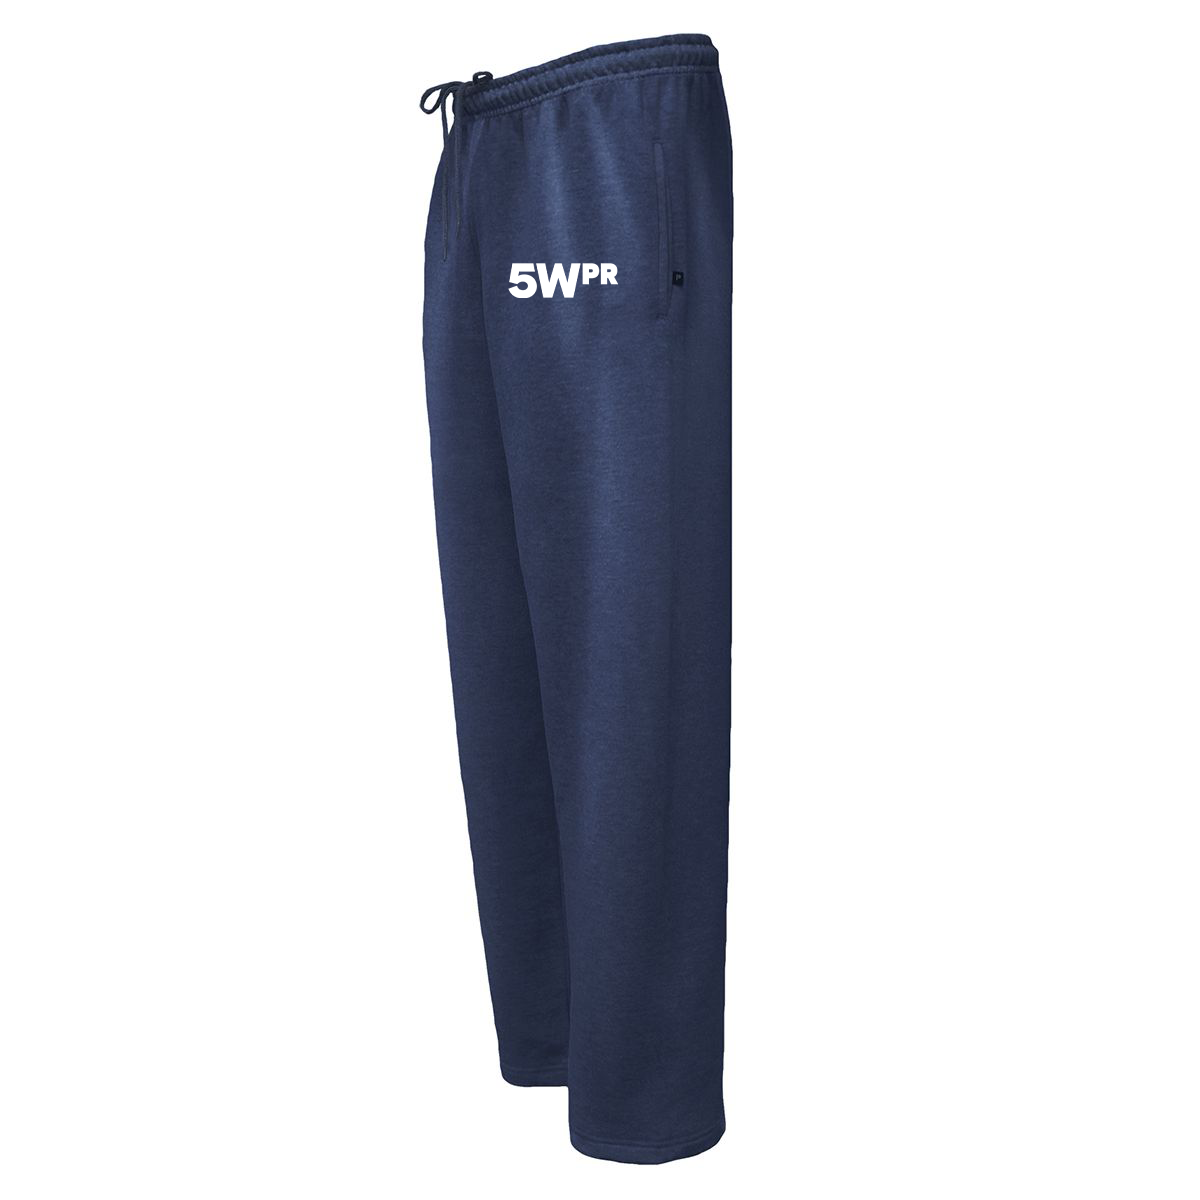 5WPR Sweatpants